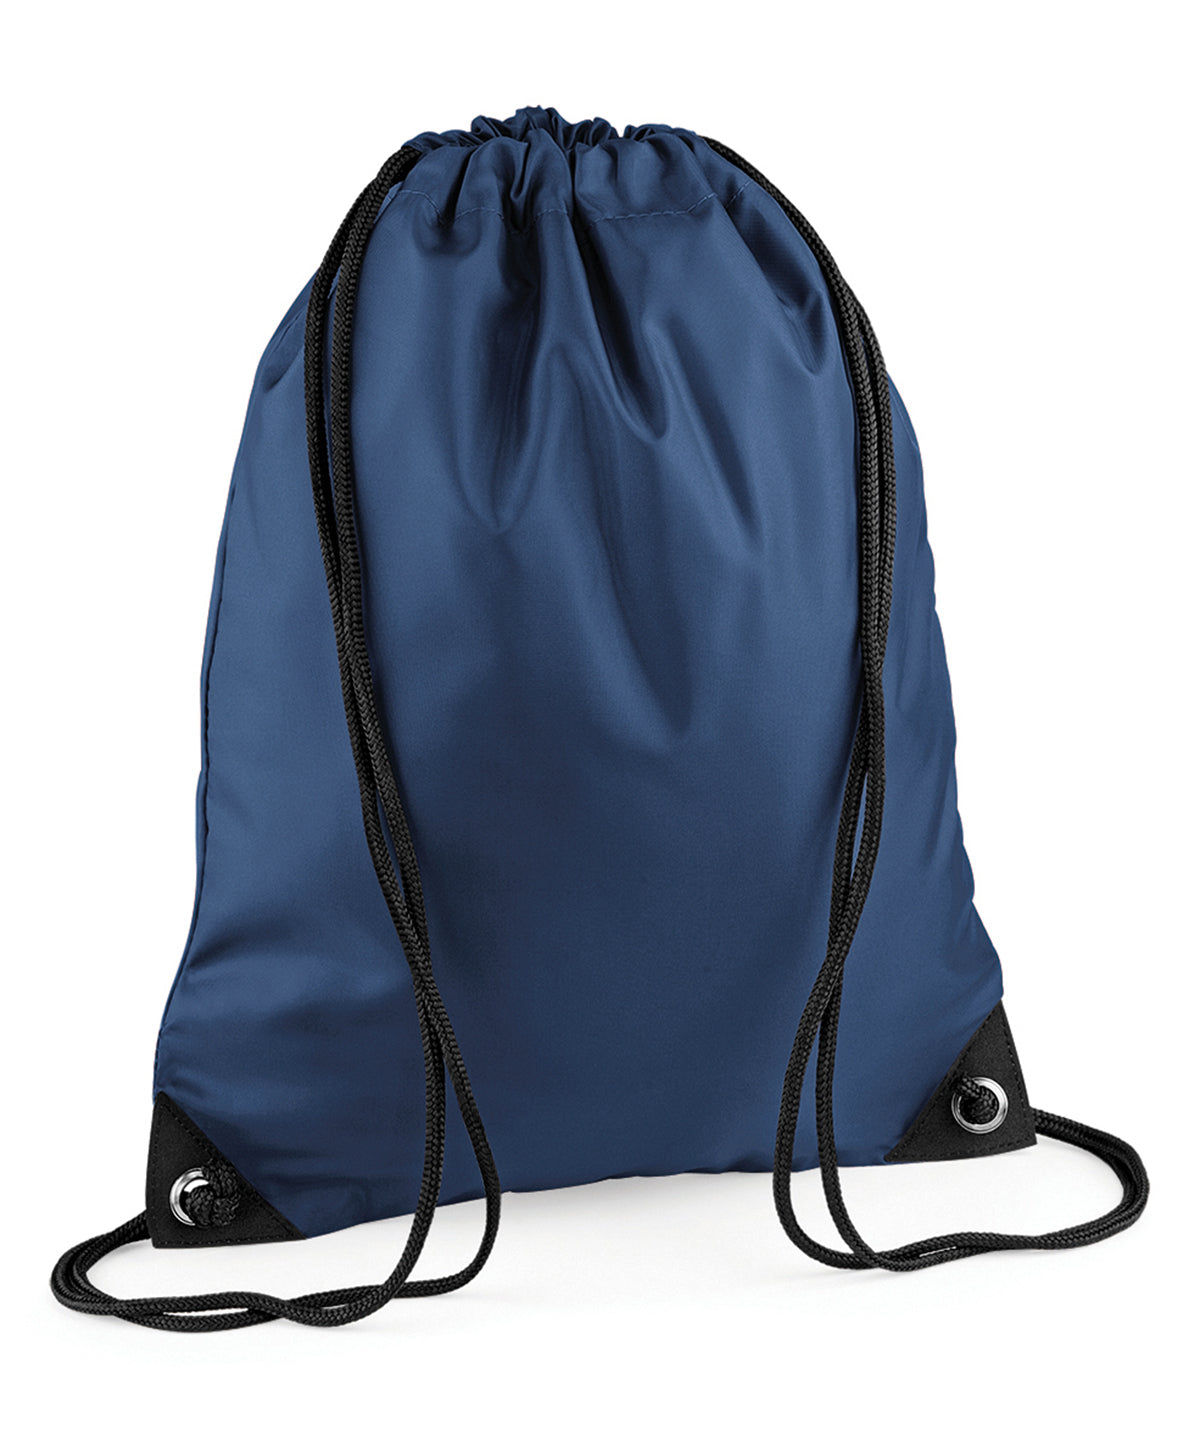 Premium Sports School PE Bags Gymsacs